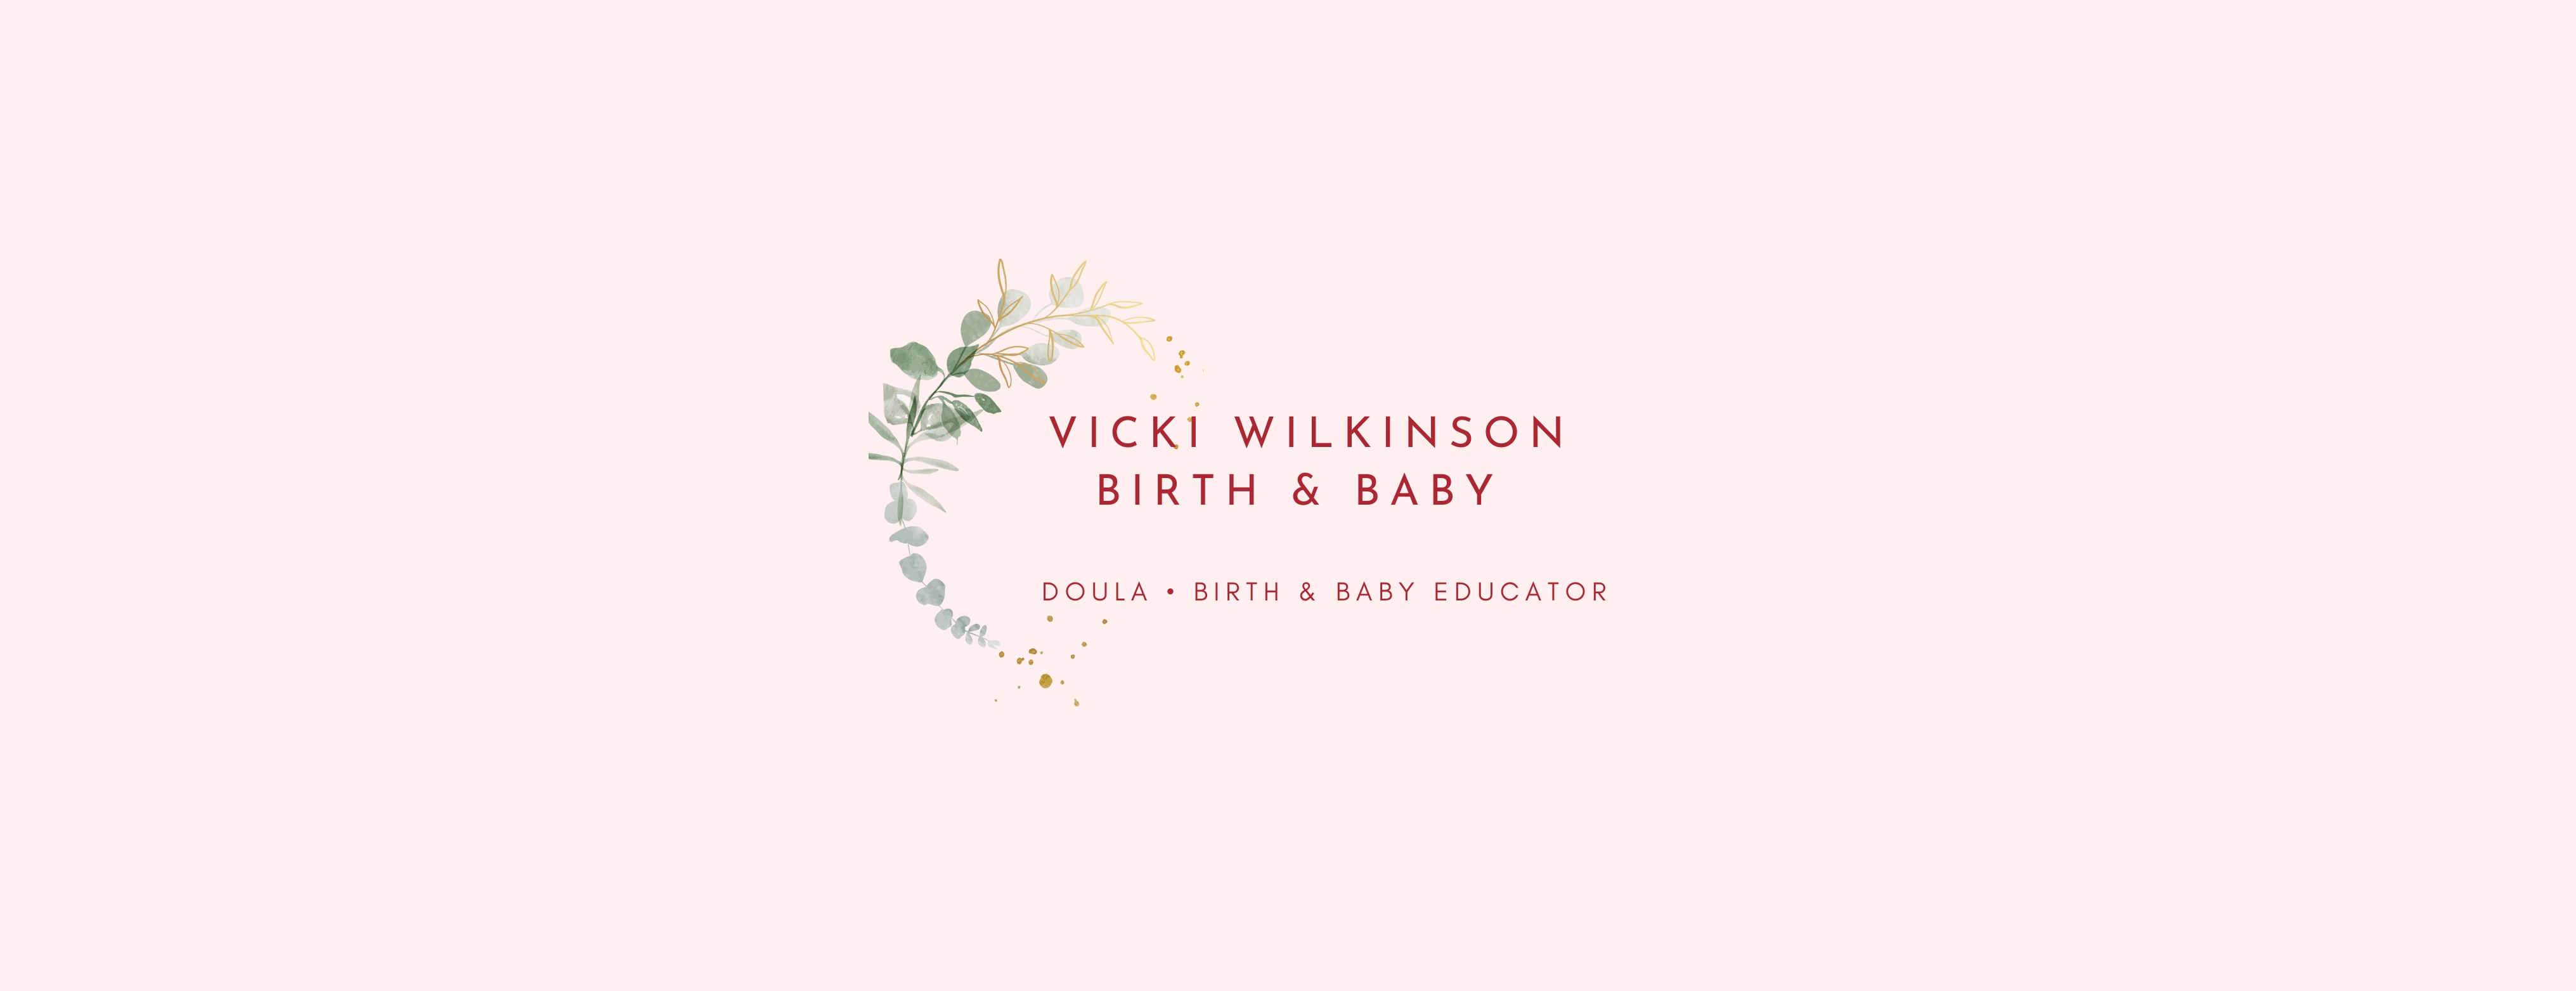 Vicki Wilkinson Birth & Baby 's main image